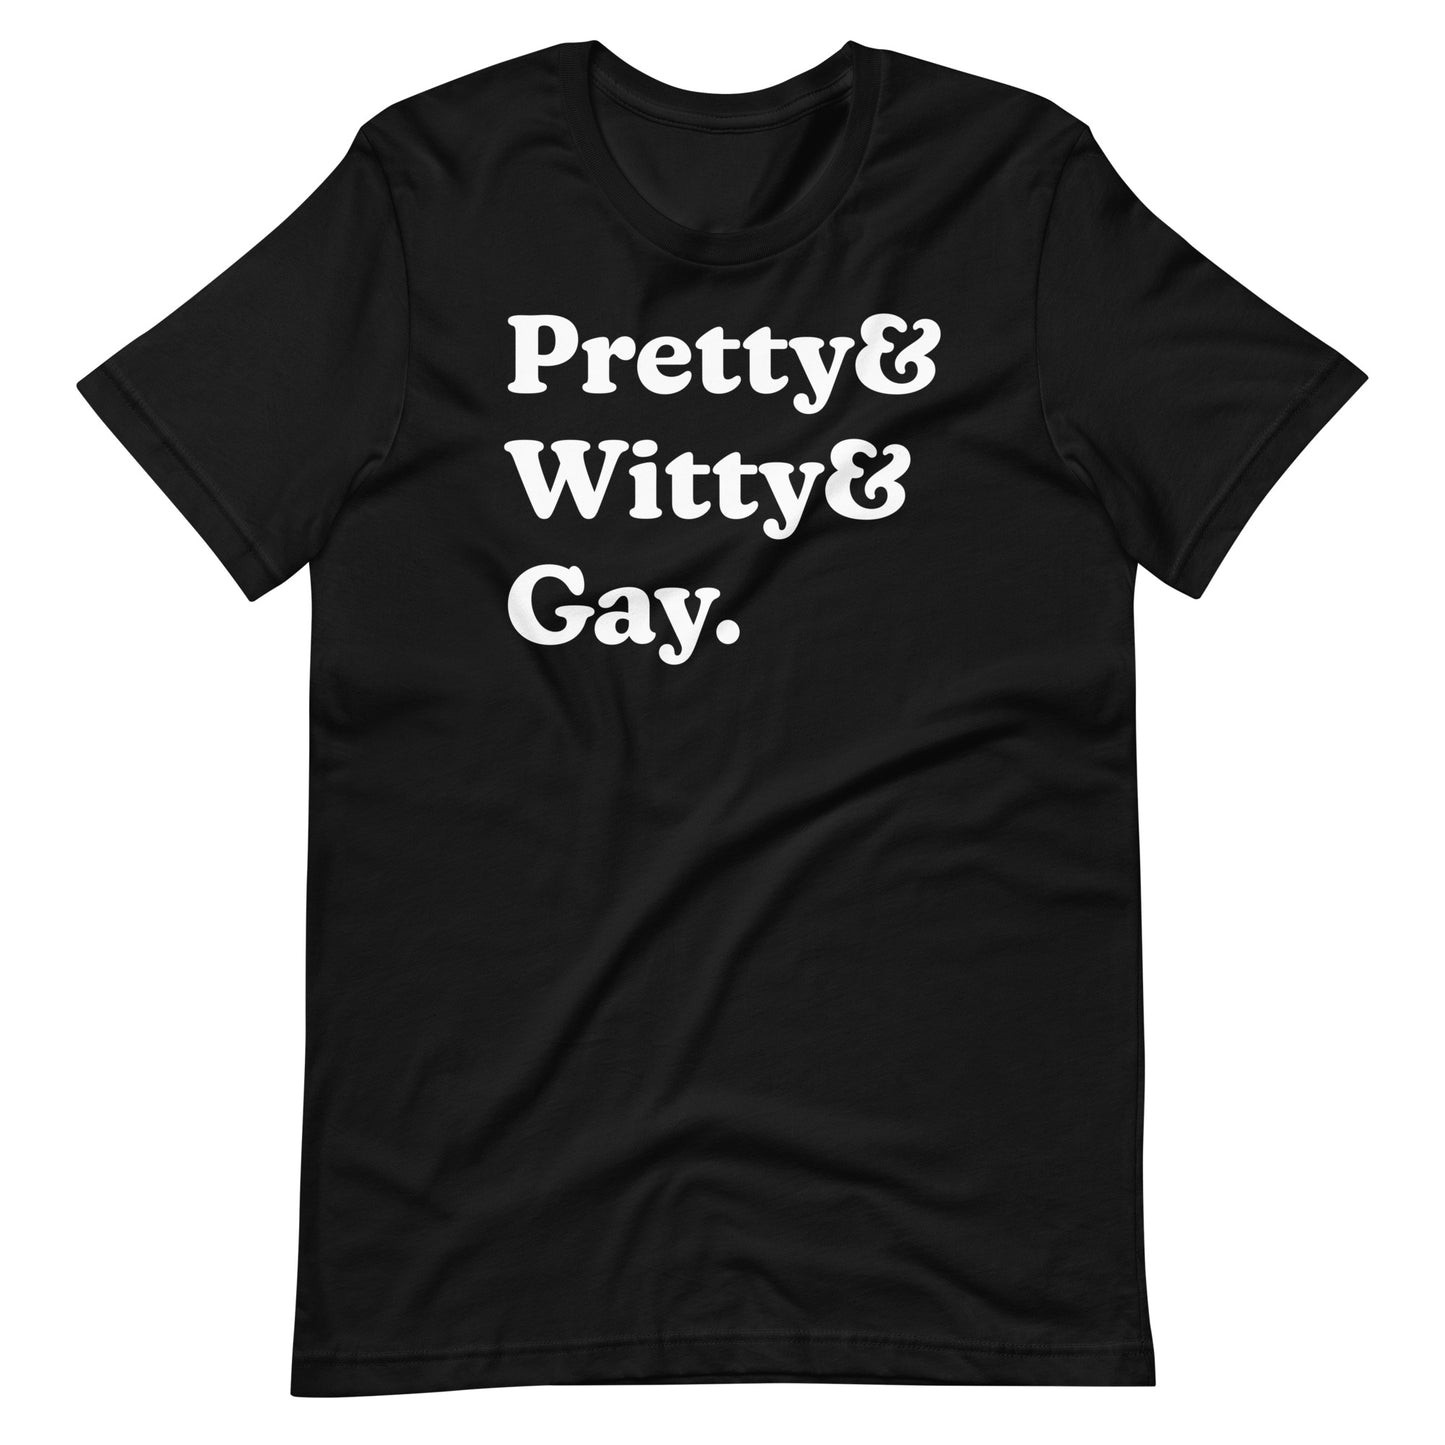 Pretty & Witty & Gay. Unisex t-shirt